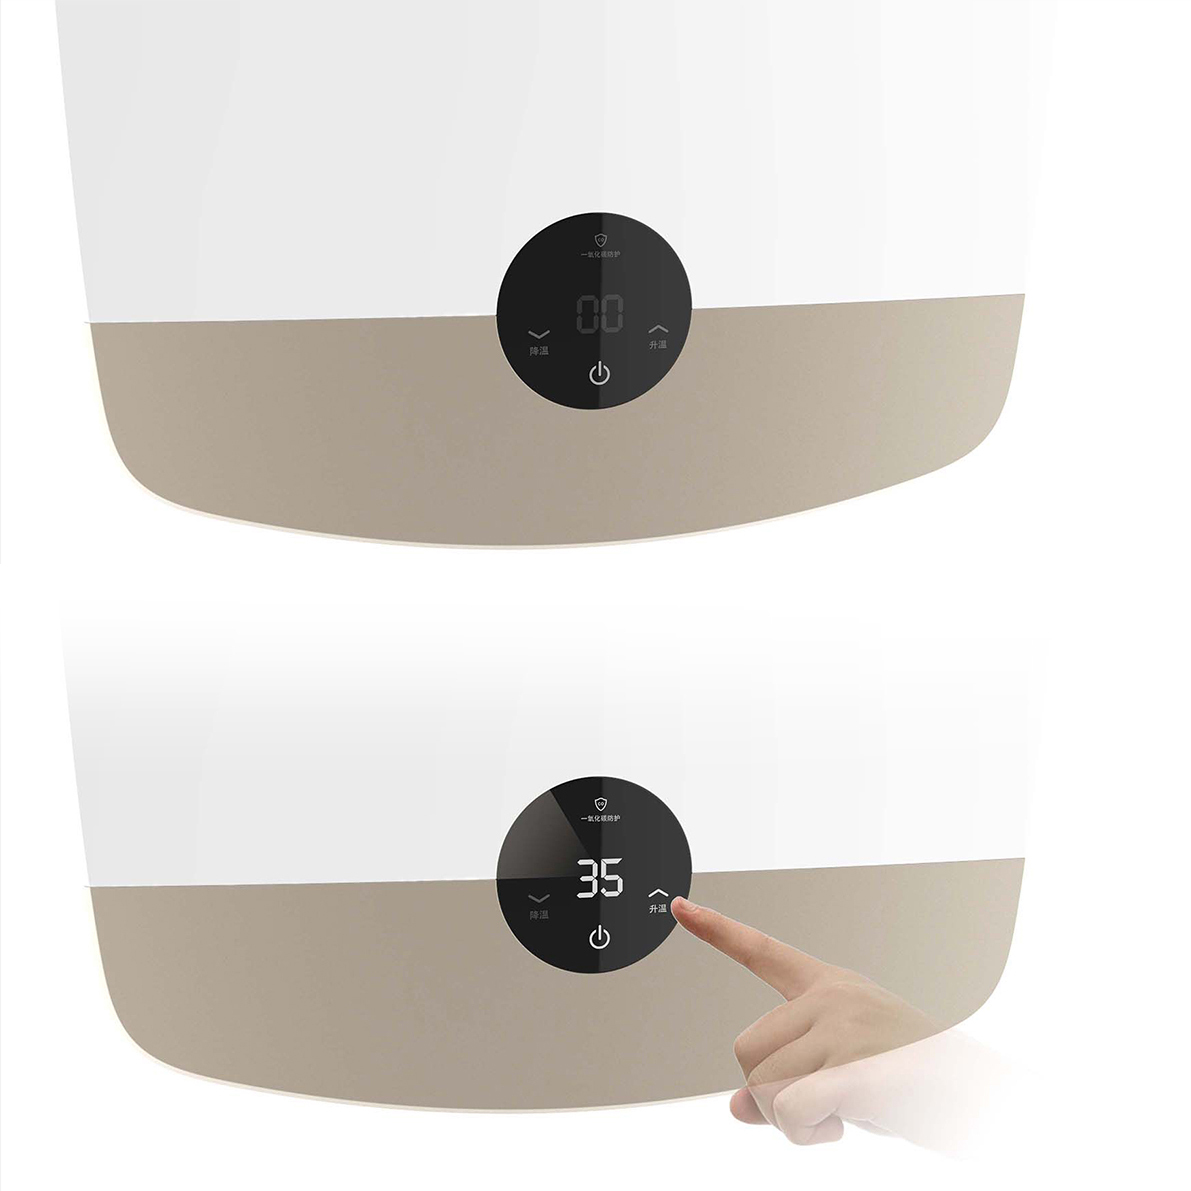 A.O.史密斯壁挂式电热水器外观设计图3